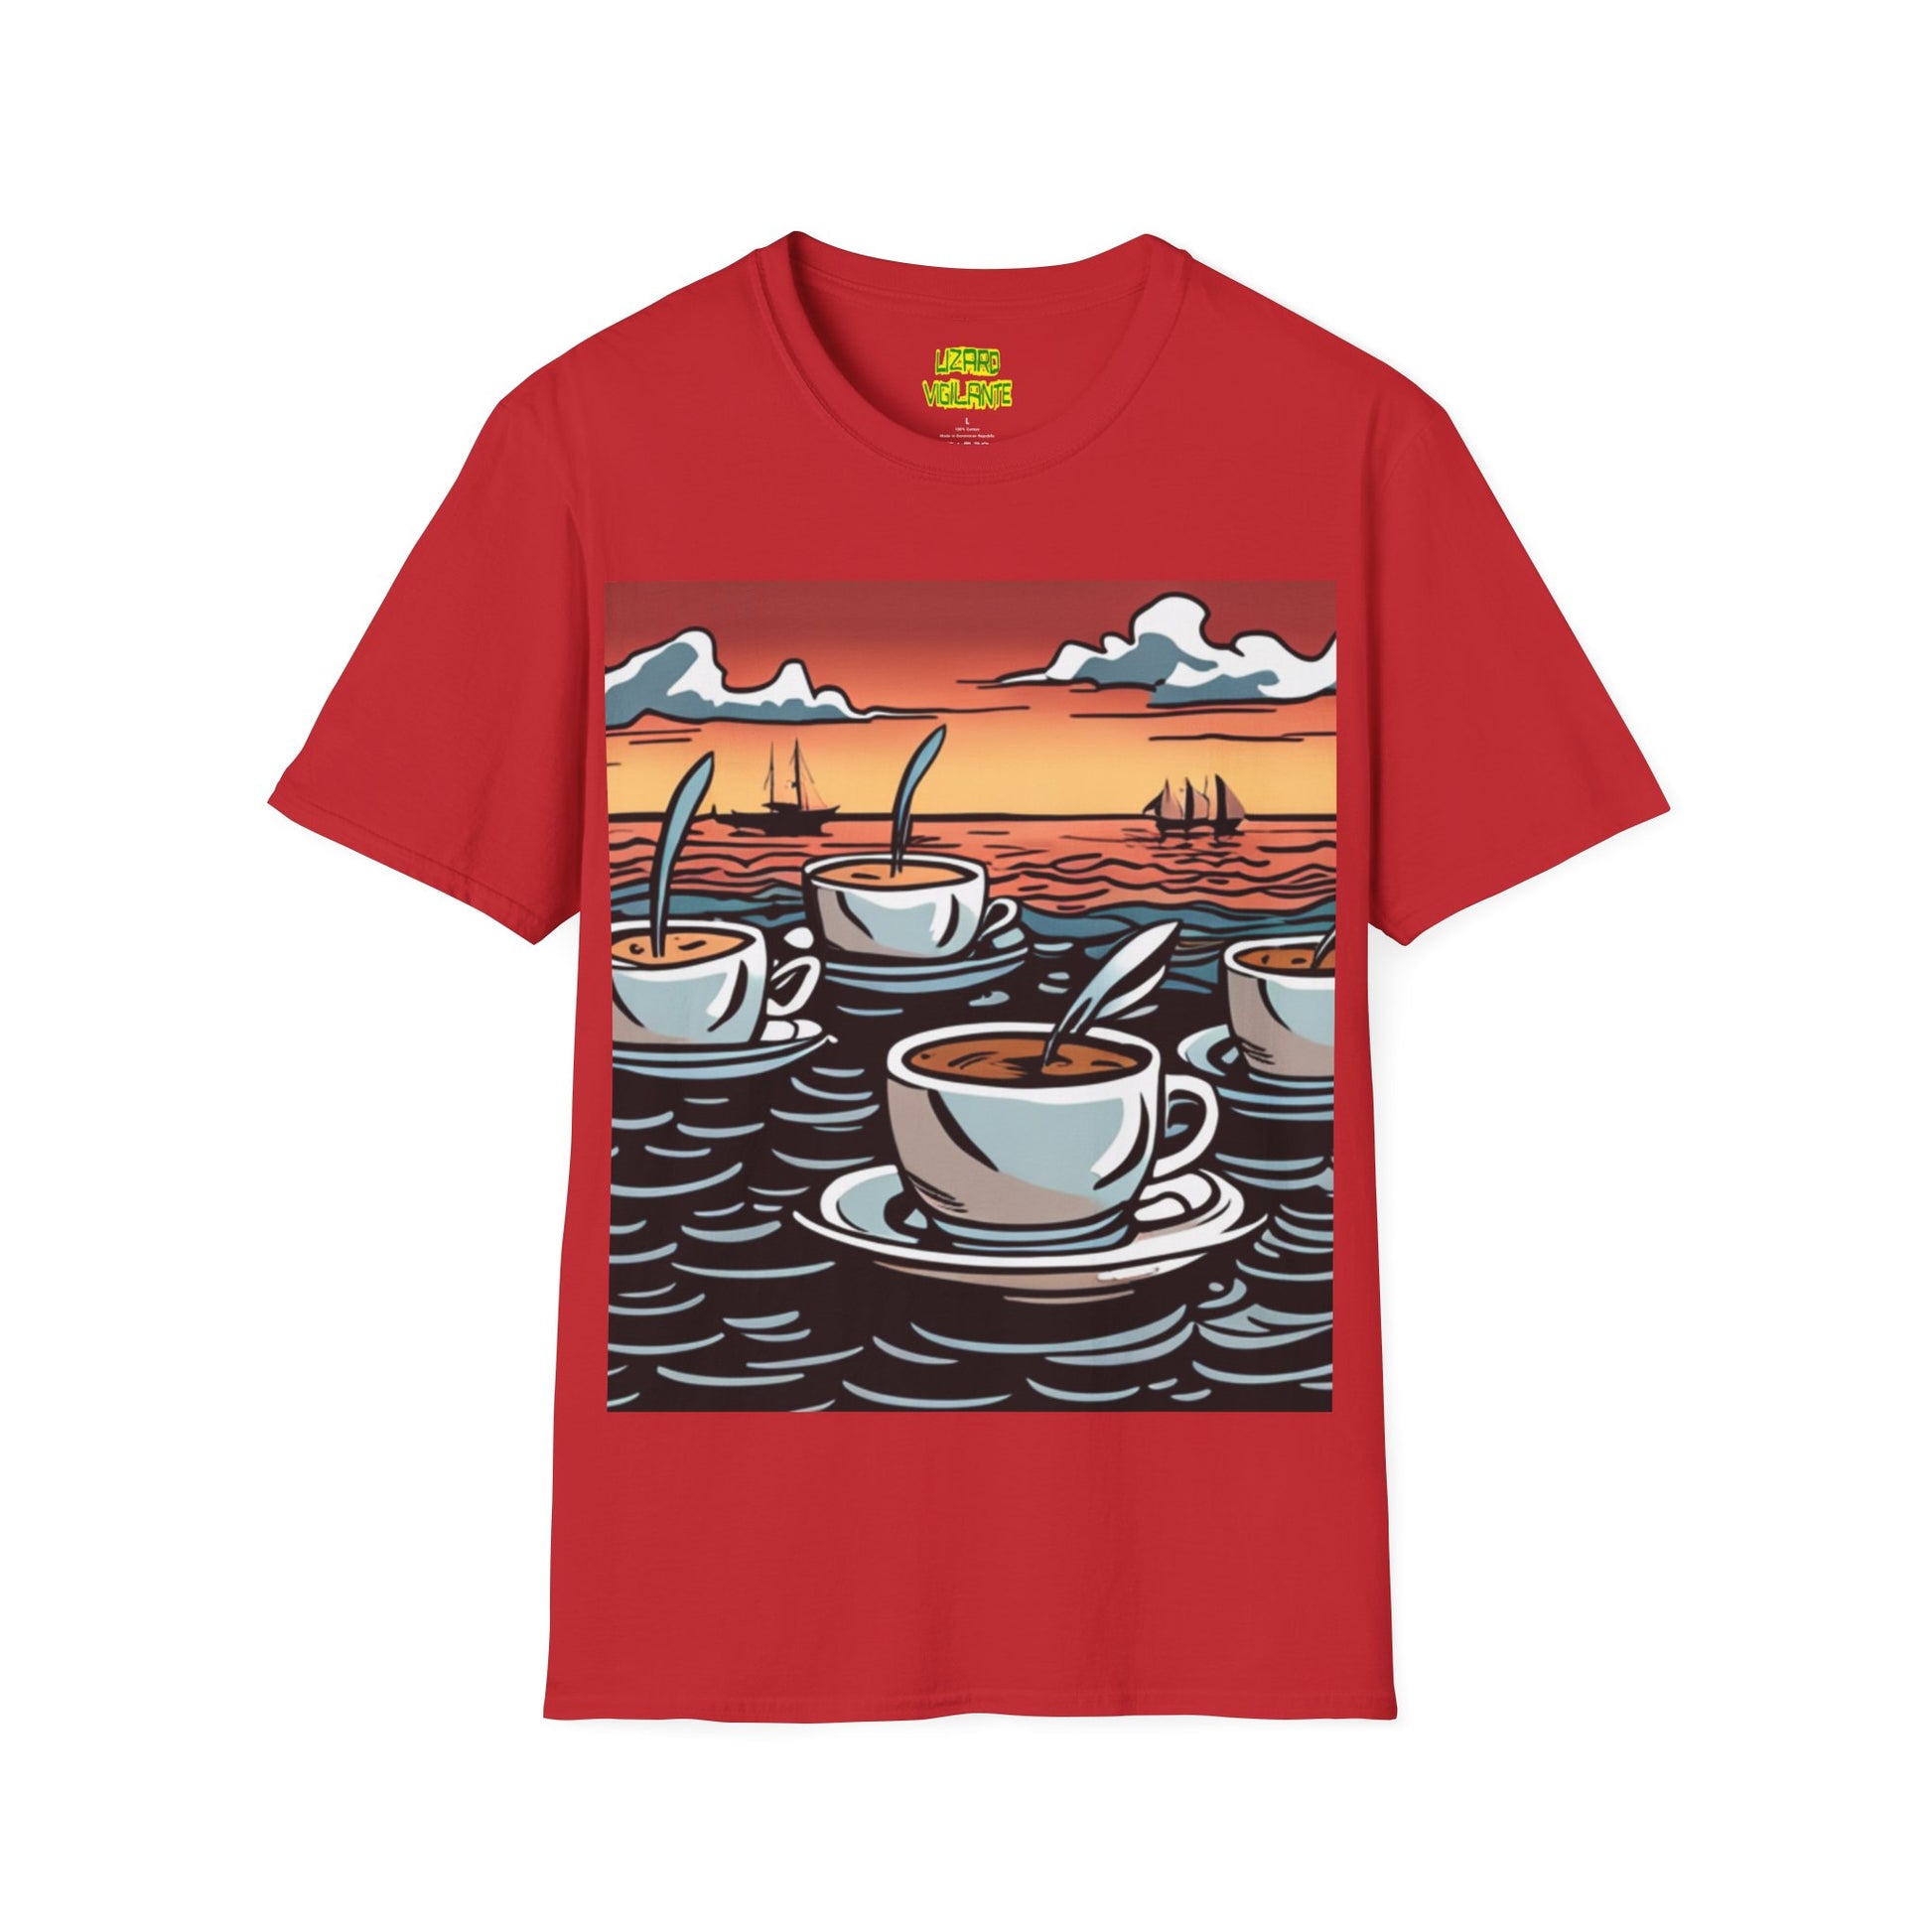 Coffee Boats Unisex Softstyle T-Shirt - Lizard Vigilante